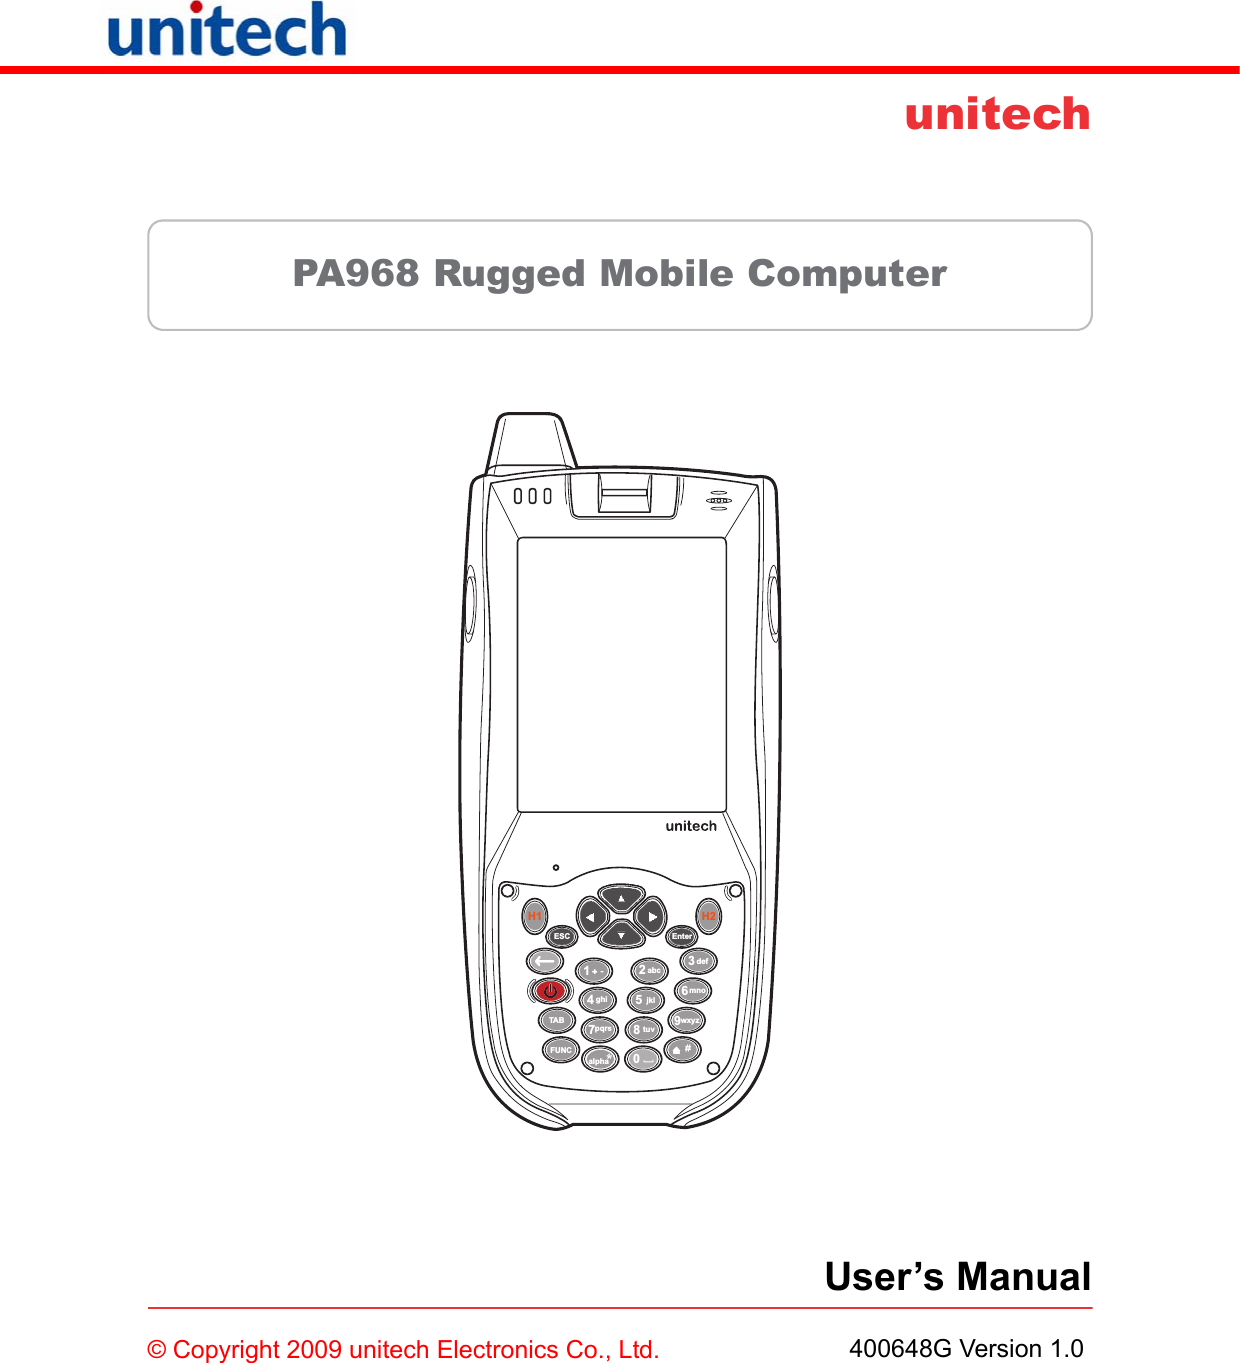 unitechPA968 Rugged Mobile ComputerUser’s Manual© Copyright 2009 unitech Electronics Co., Ltd.1alphaTABtuv8FUNCH10abc2def3ghi4jkl5mno6pqrs7wxyz9ESC EnterH2400648G Version 1.0